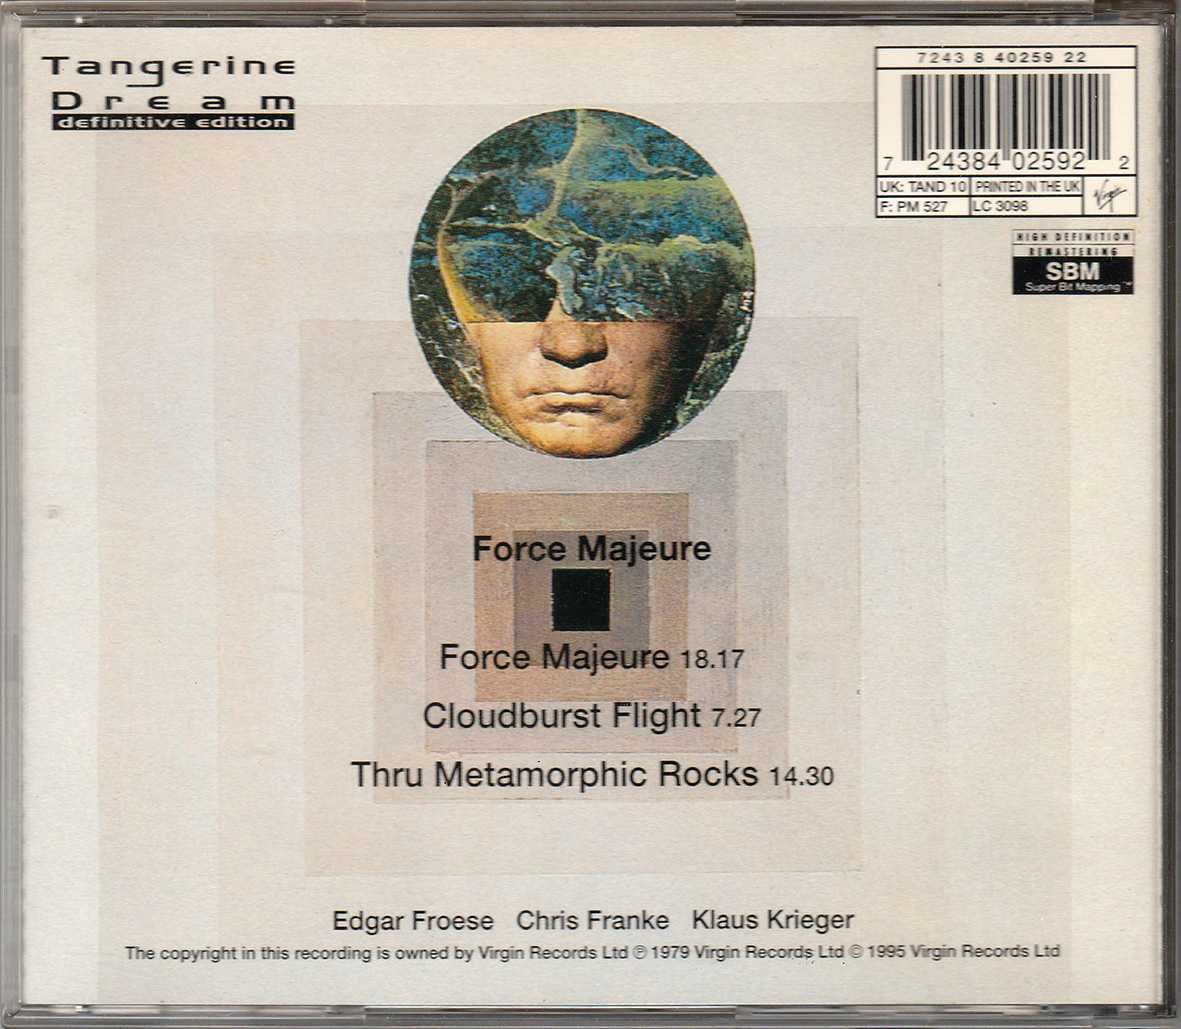 CD Tangerine Dream - Force Majeure